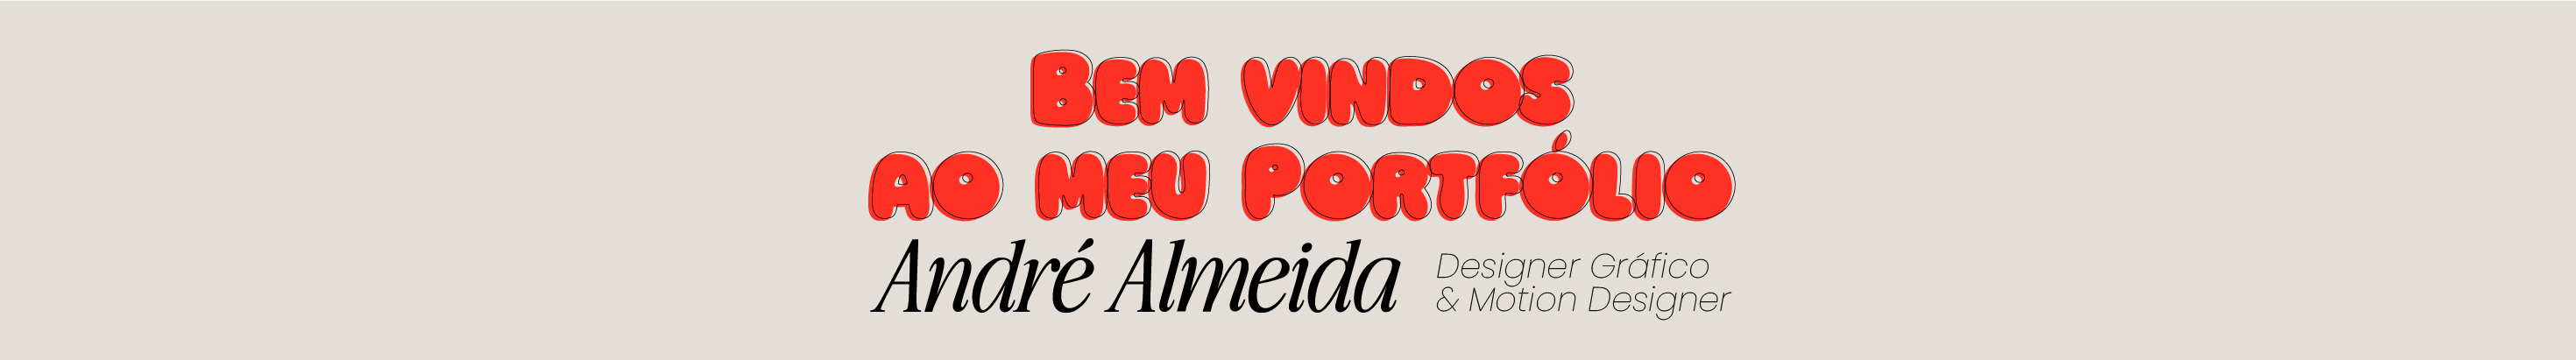 André Almeida's profile banner